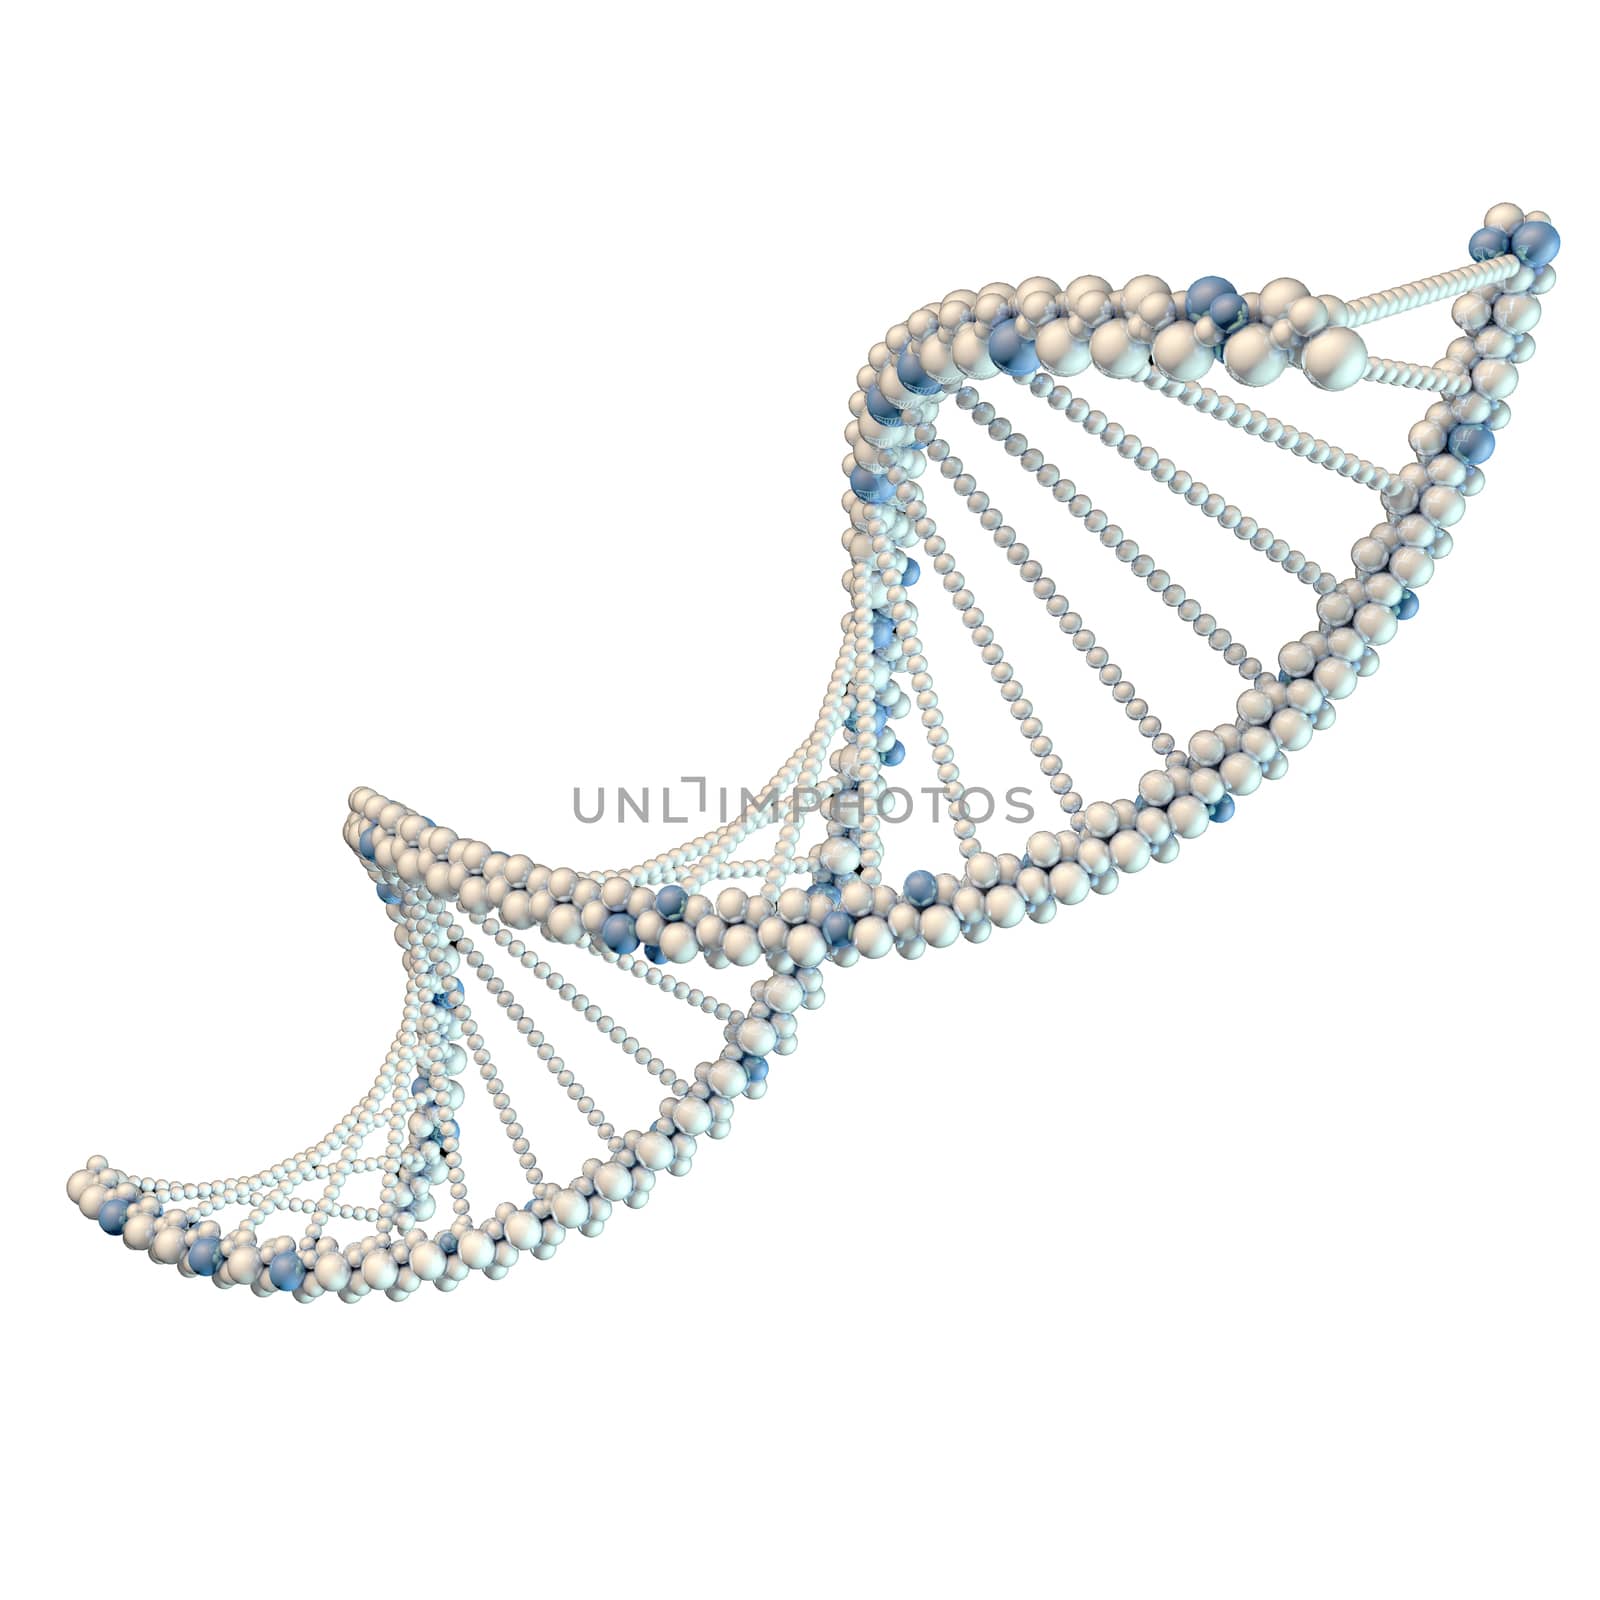 Illustration of white DNA chain by cherezoff